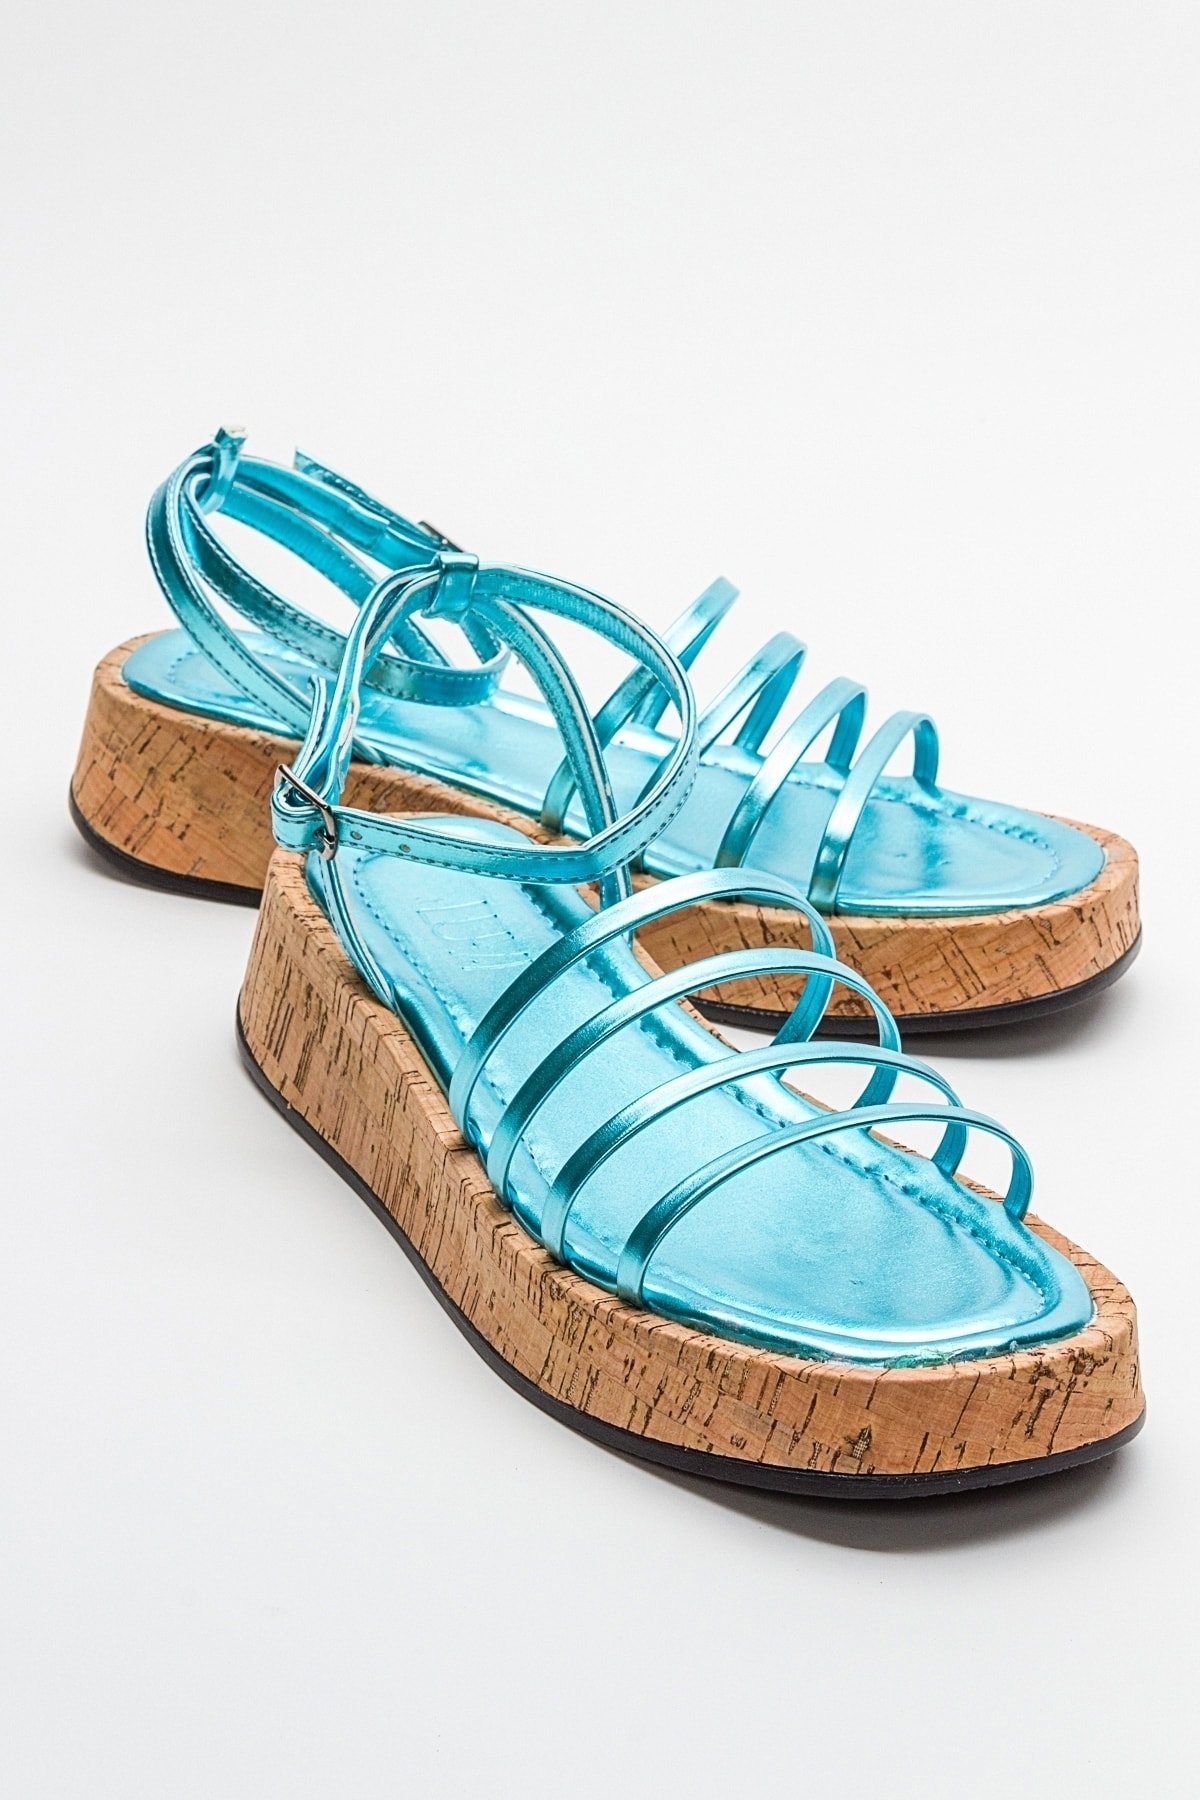 LuviShoes ANGELA Women's Metallic Baby Blue Sandals